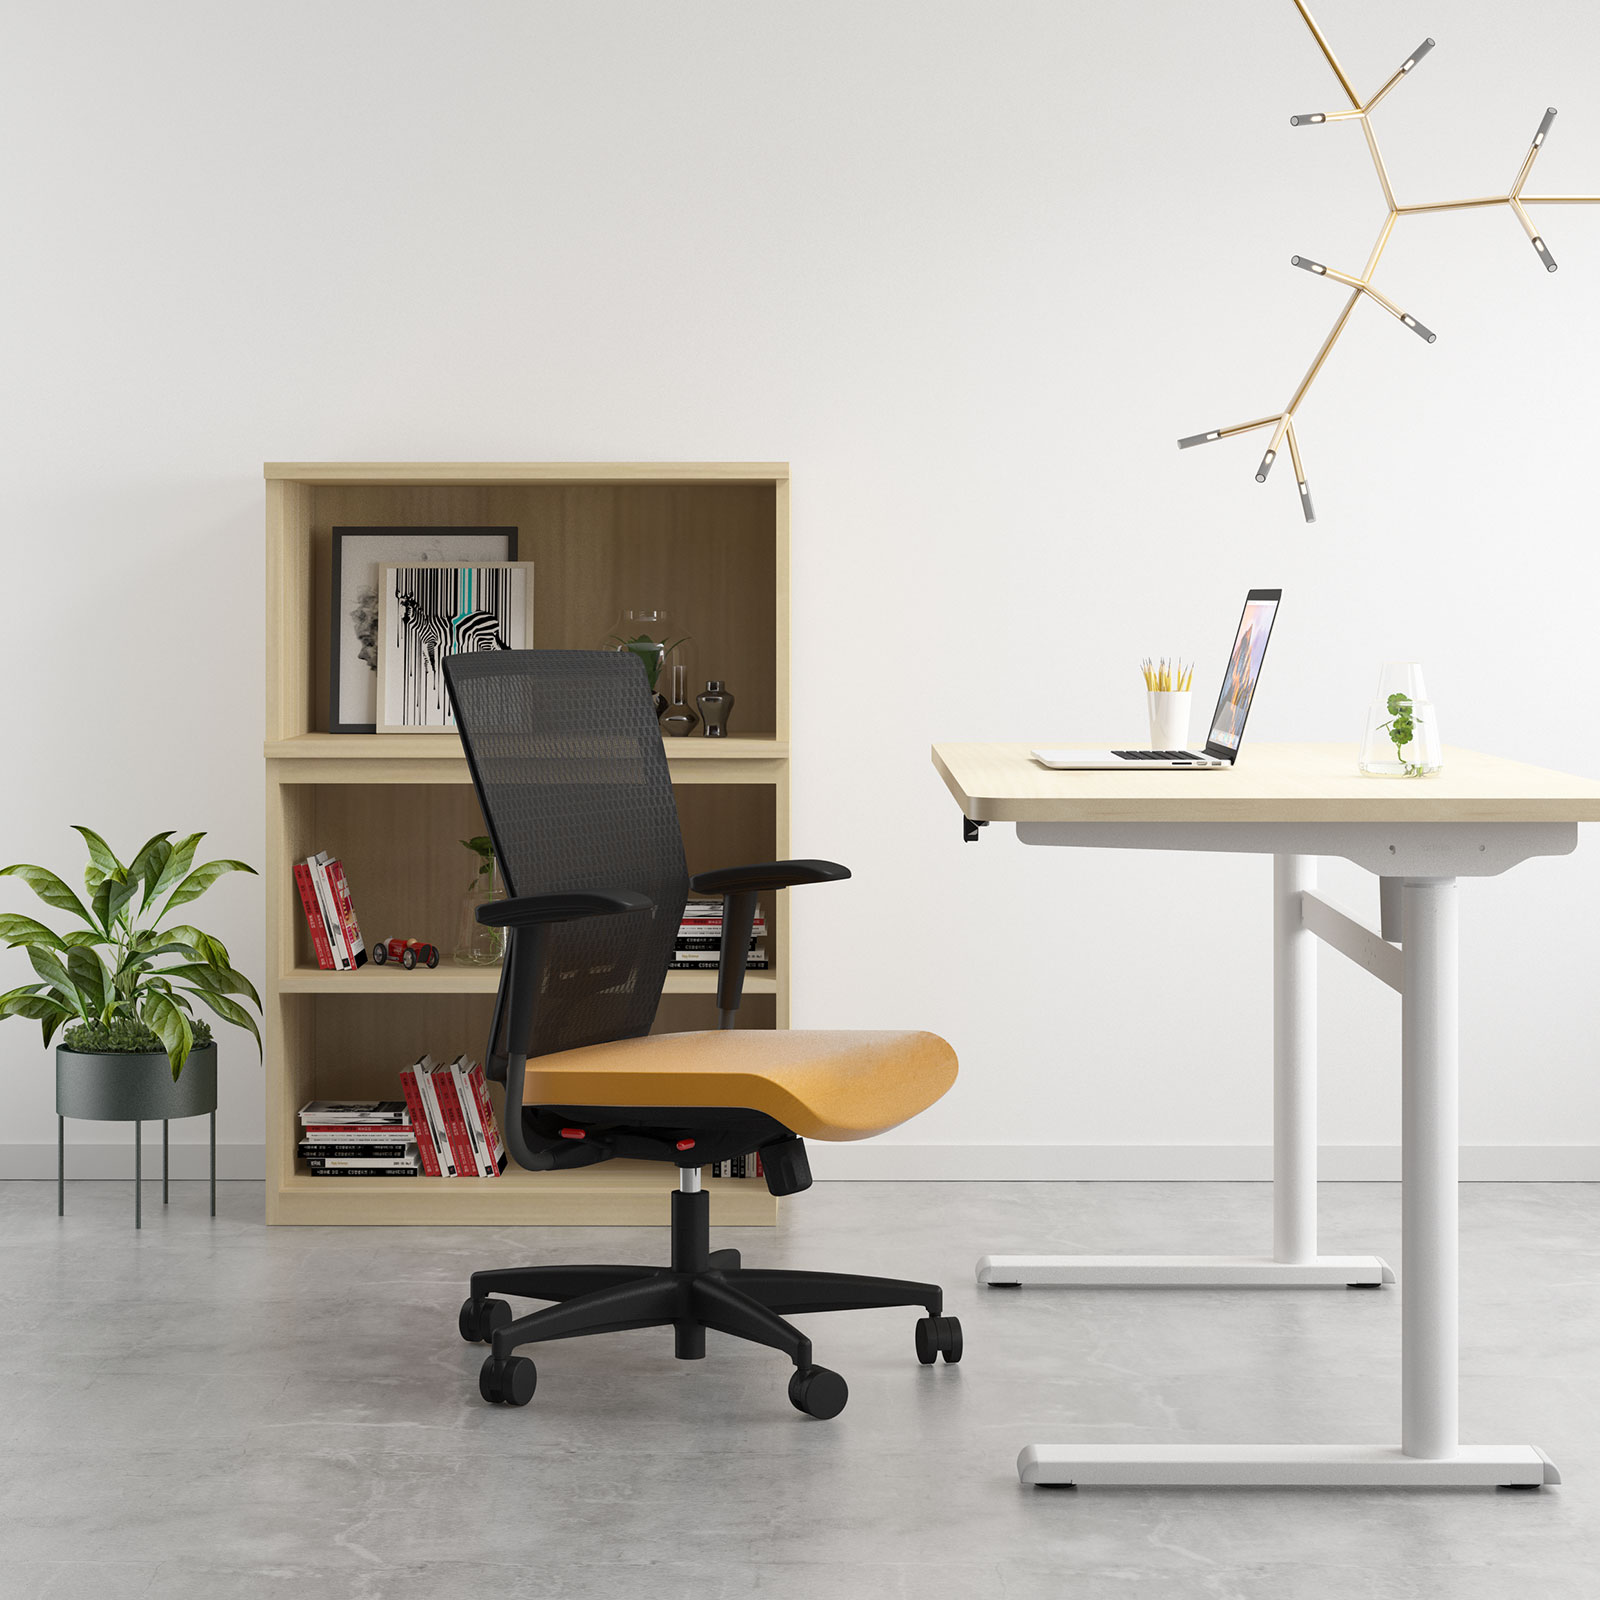 VERTIGO-R-SM height adjustable table with PresaV2 office chair